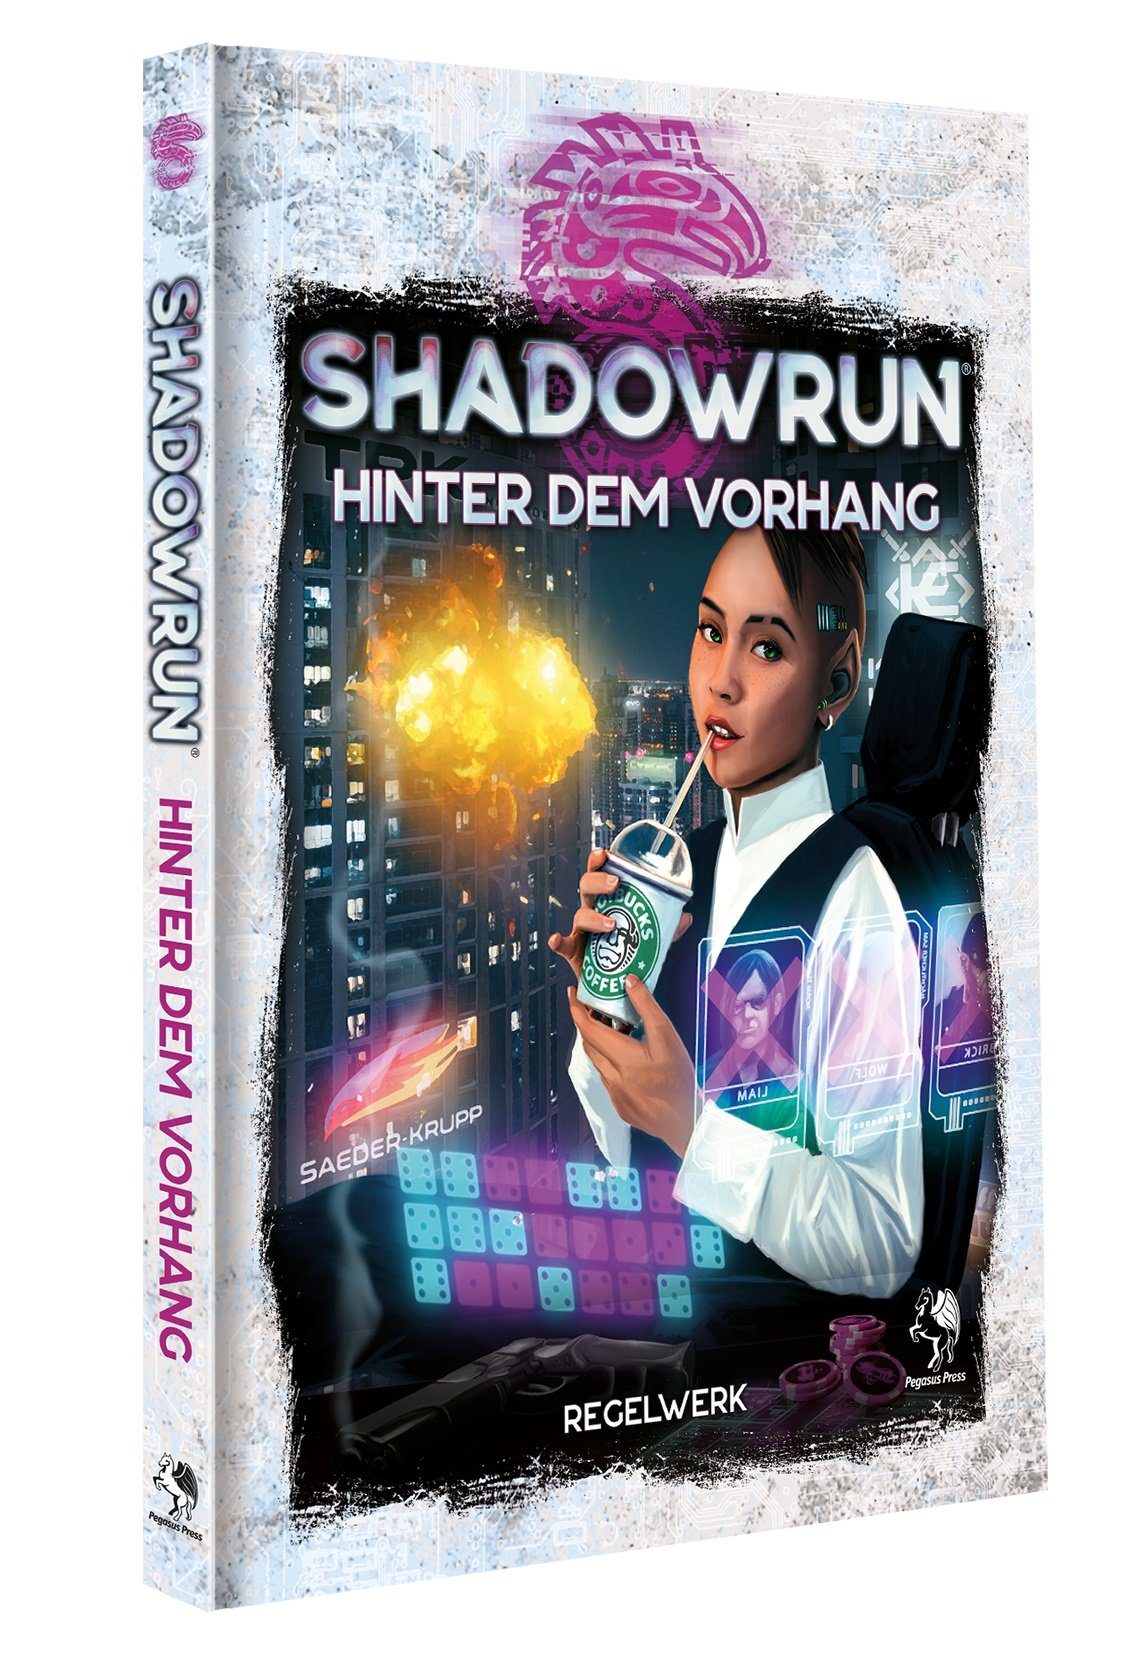 dem Pegasus Spiele Shadowrun: Hinter (Hardcover) Verbandbuch Vorhang